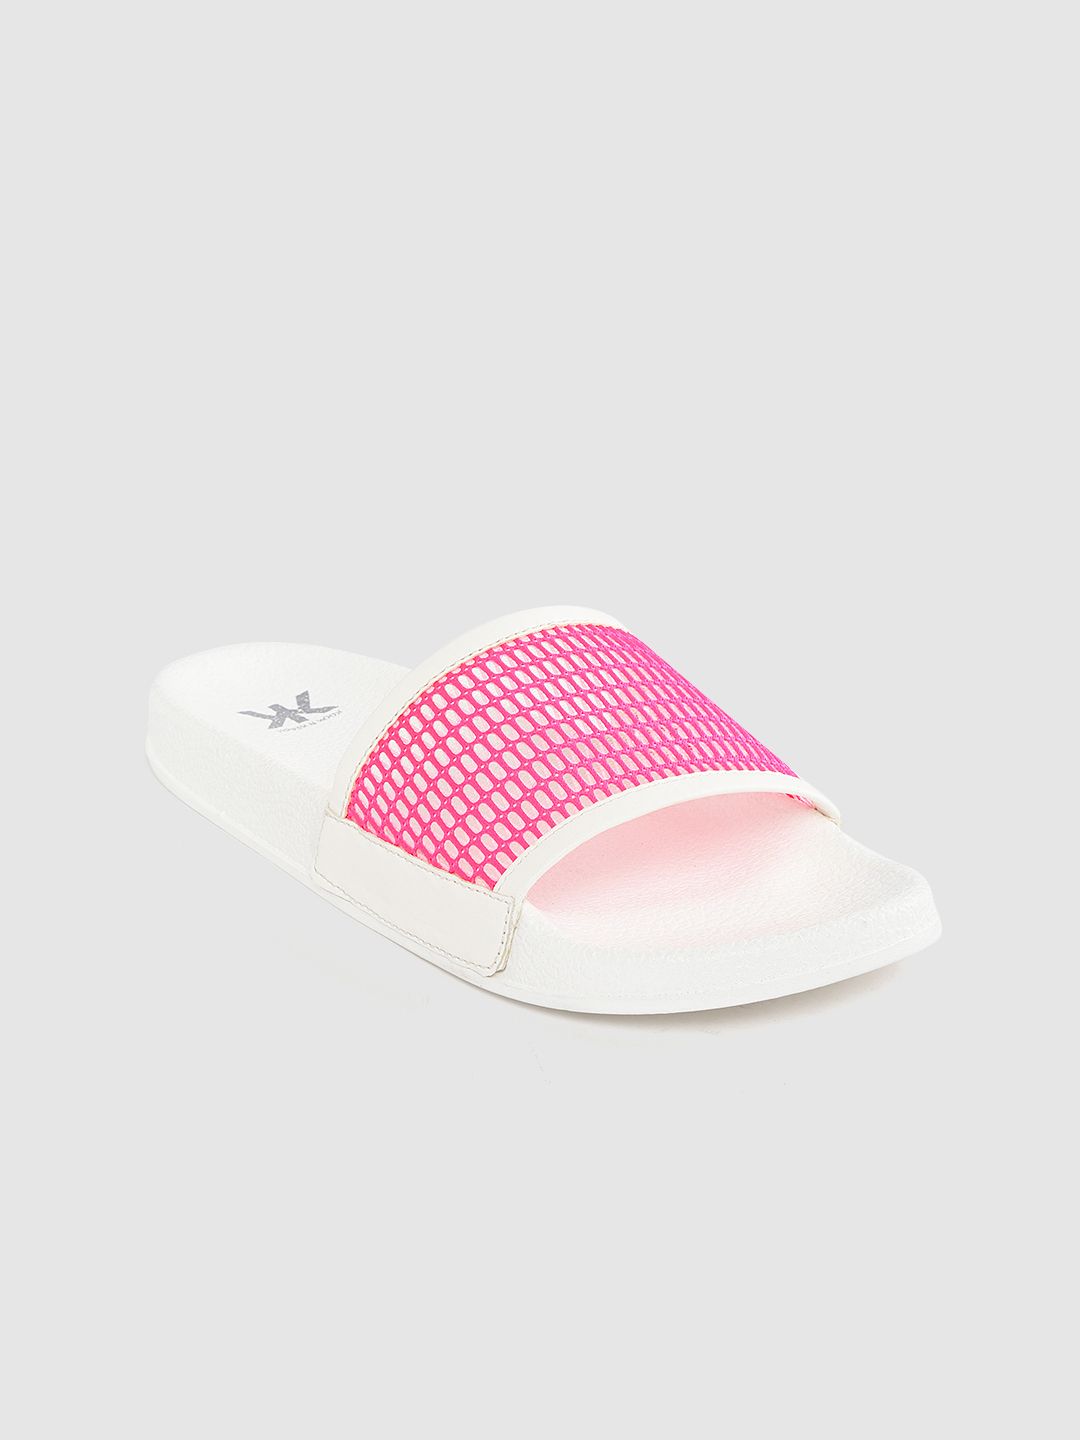 Kook N Keech Women Pink & White Woven Design Sliders Price in India